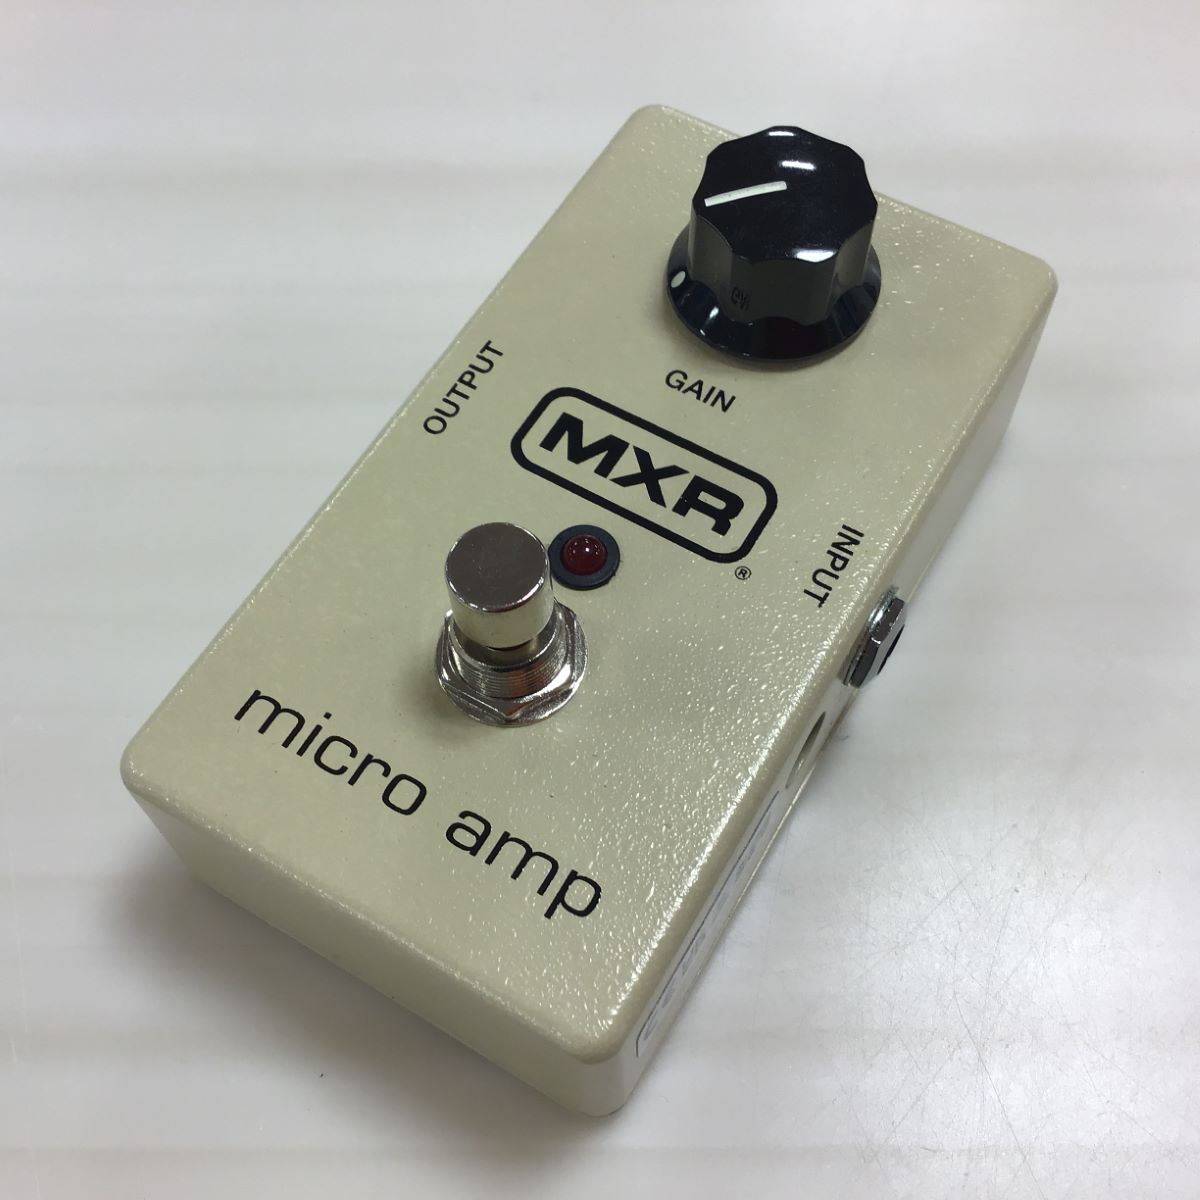 MXR M133 Micro Amp コンパクトエフェクター【ブースター】 エム ...